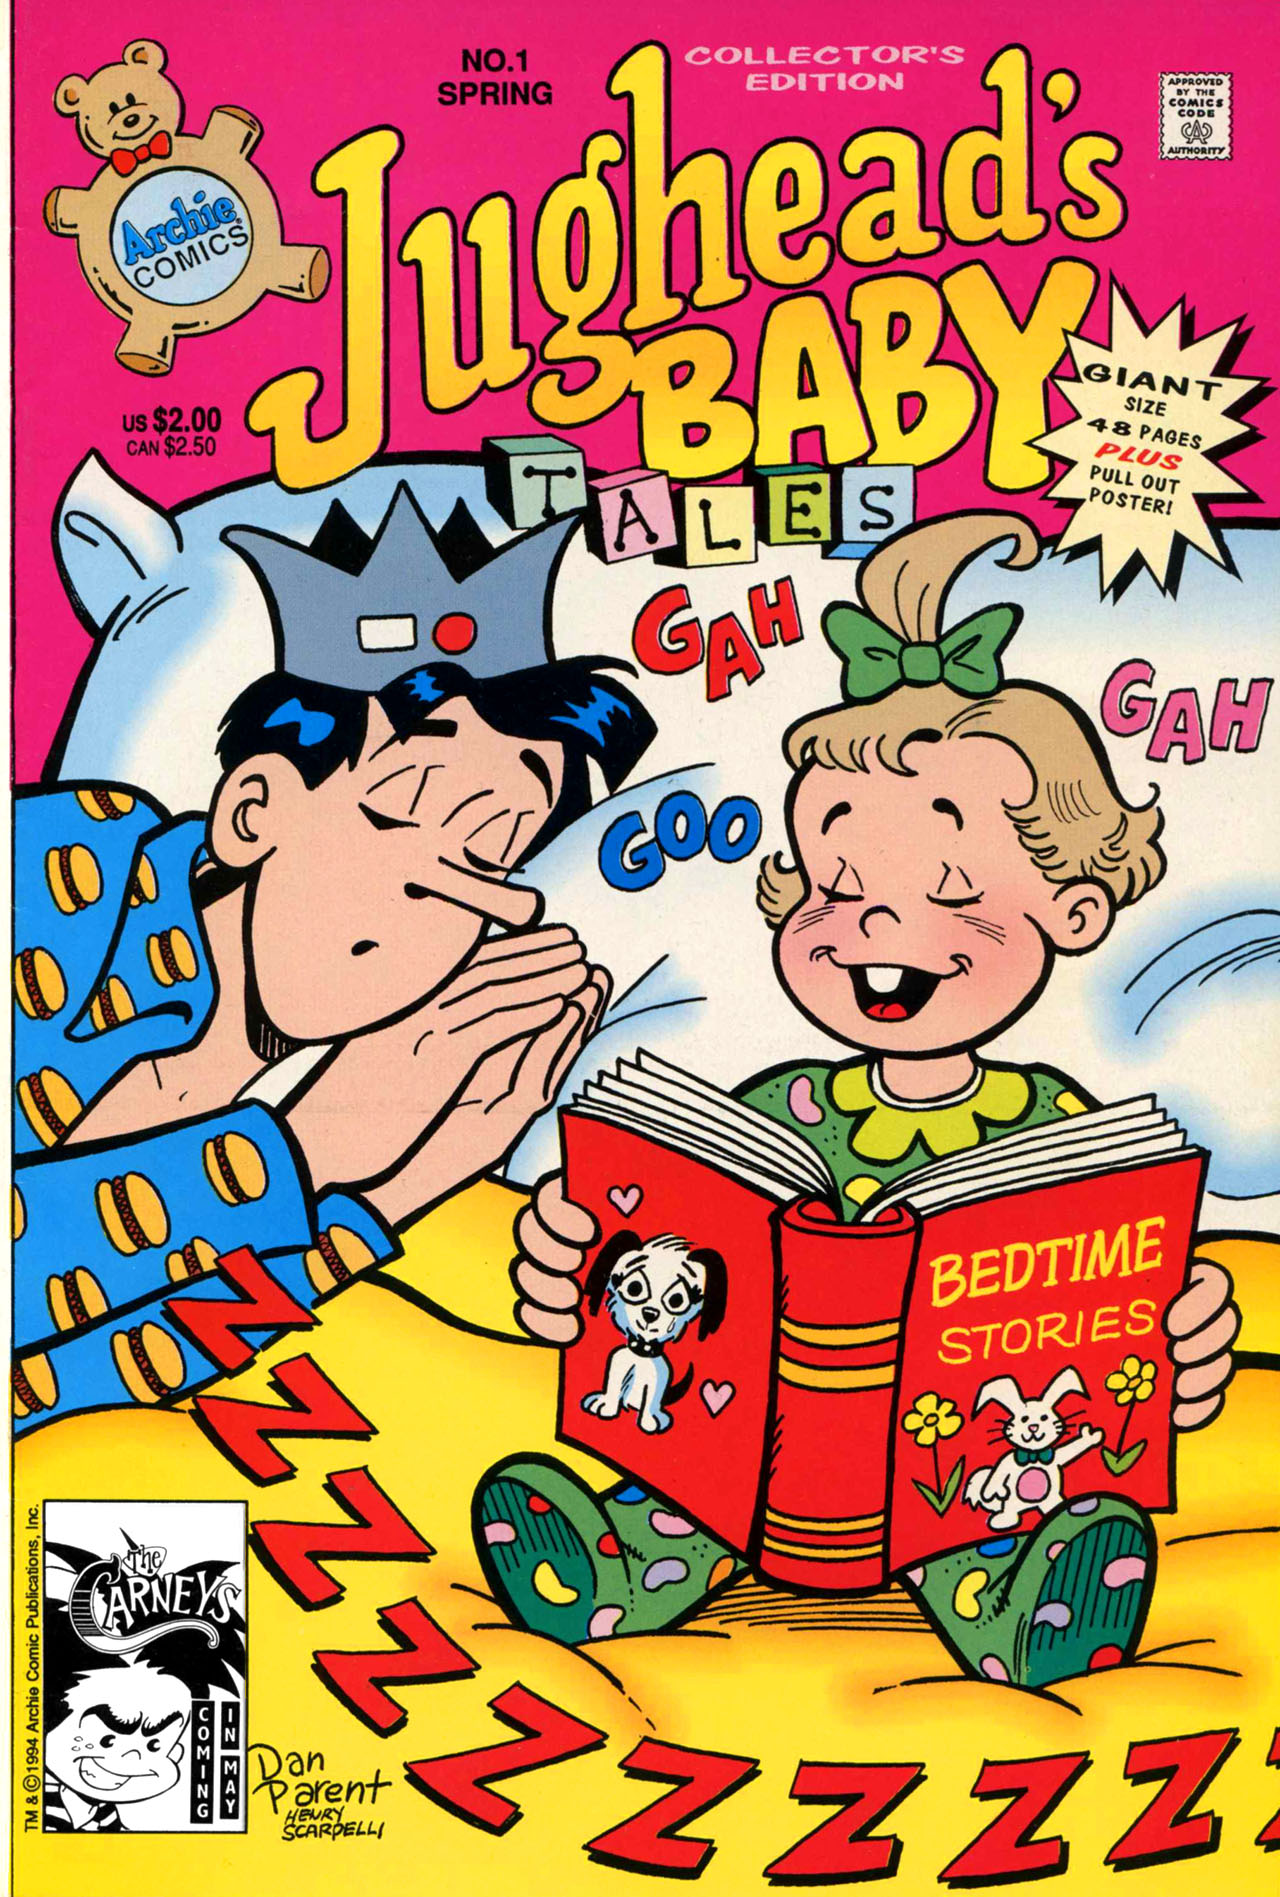 Read online Jughead's Baby Tales comic -  Issue #1 - 1